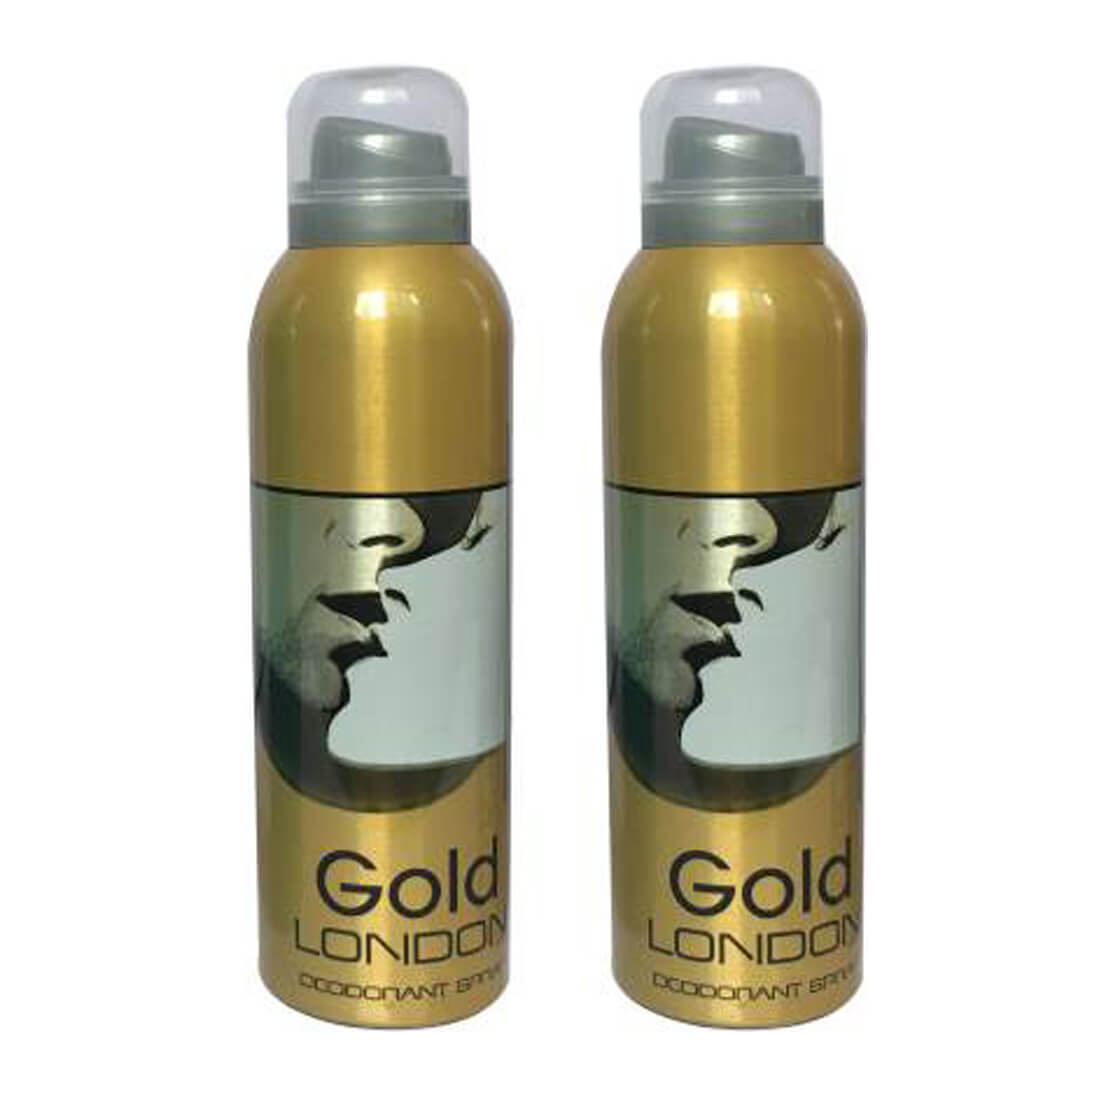 London Gold Deodorant Body Spray Pack of 2 x 200ml